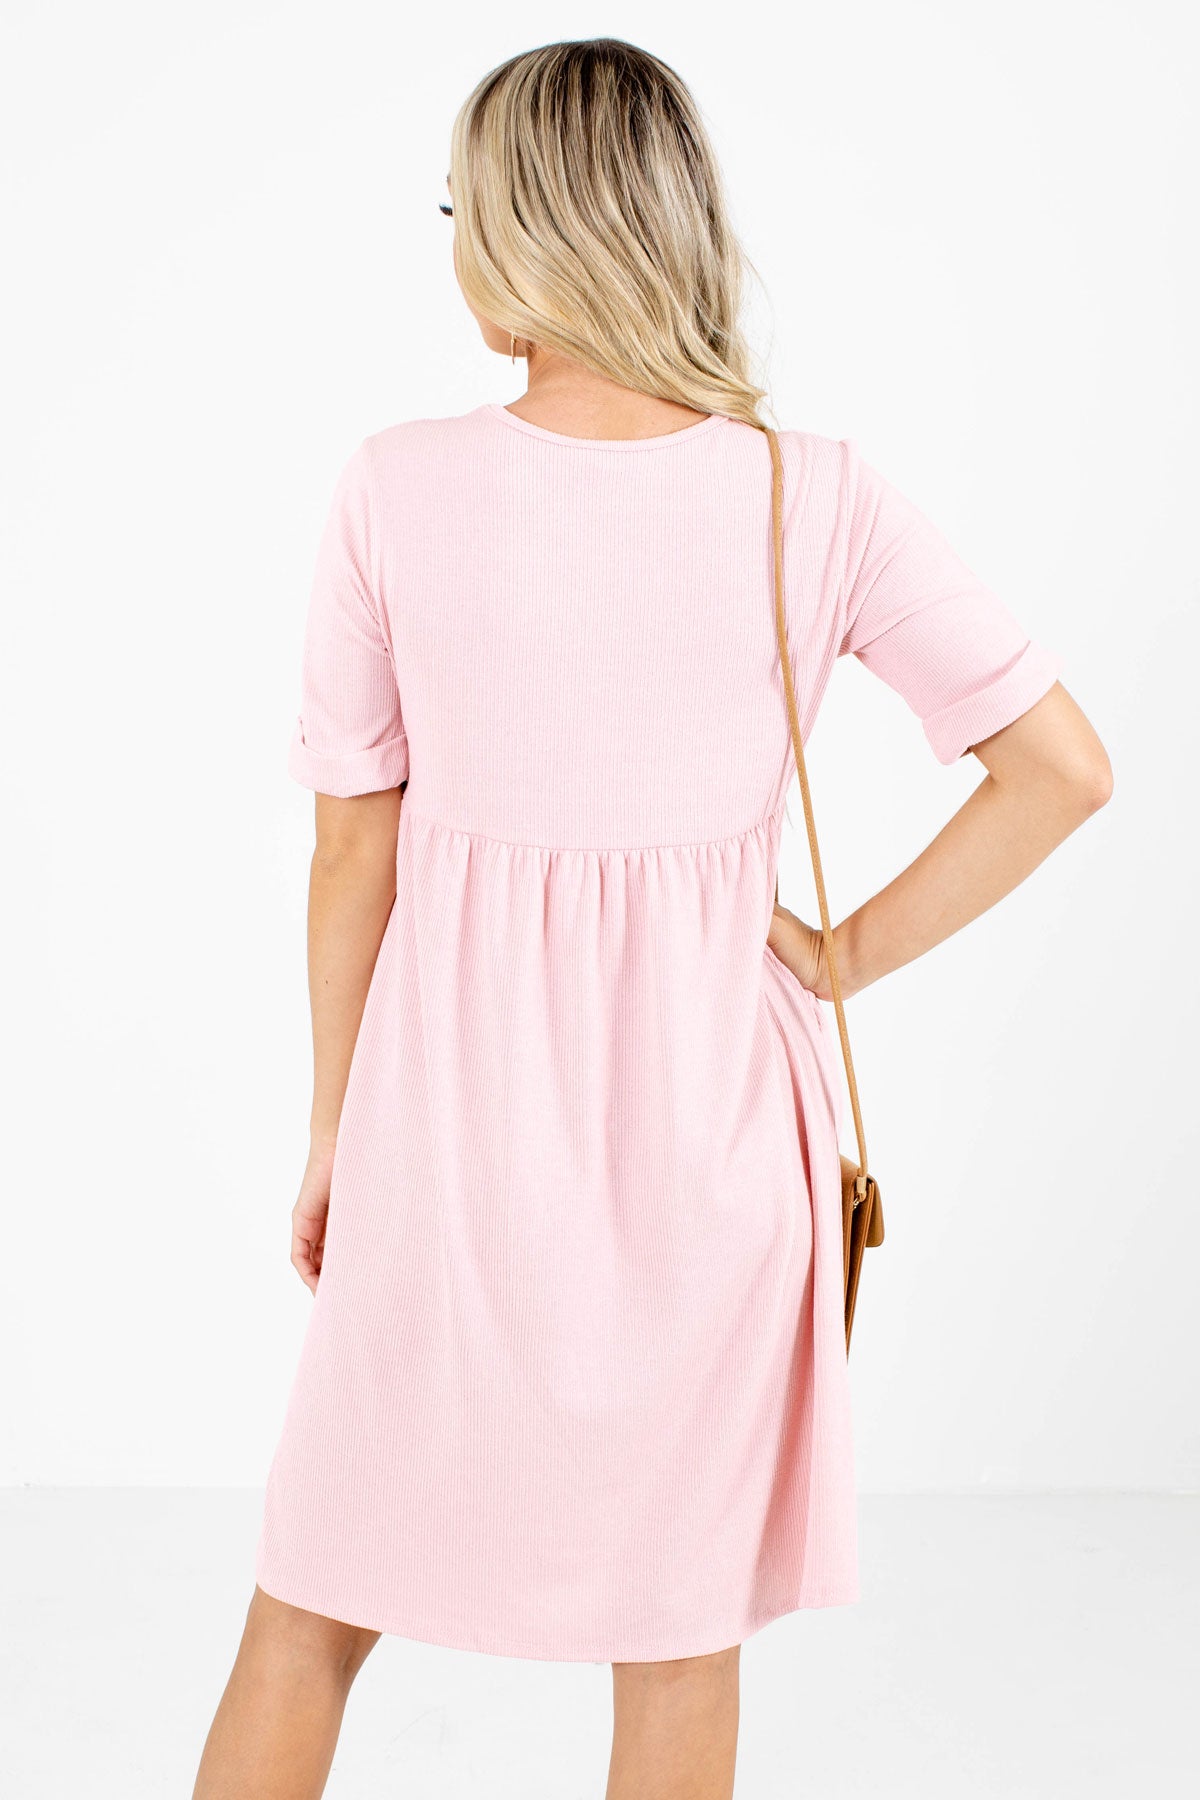 Women's Pink Cuffed Sleeve Boutique Knee-Length Dress